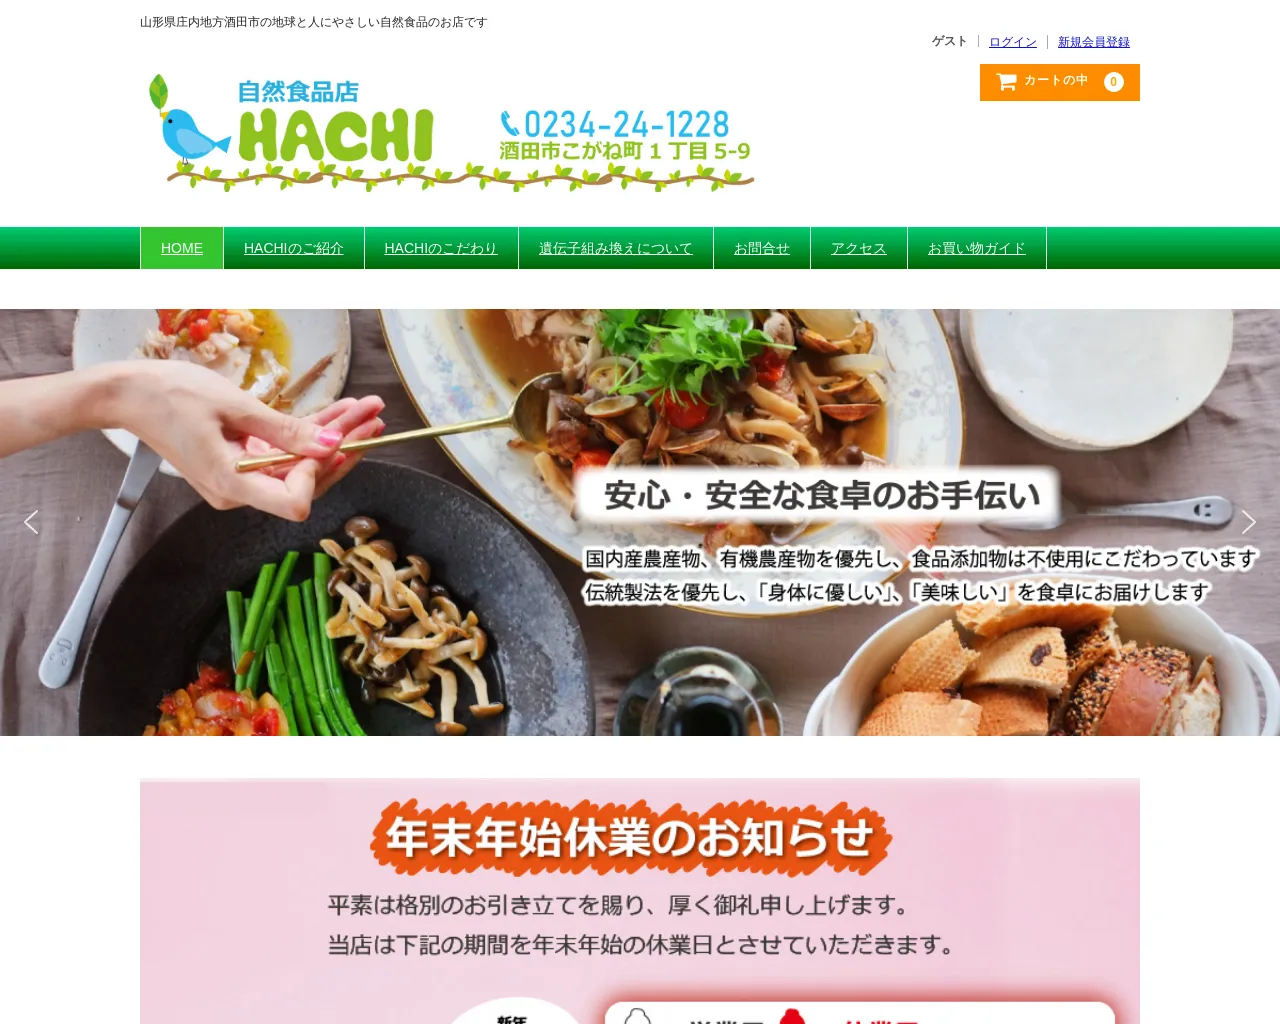 自然食品店HACHI site